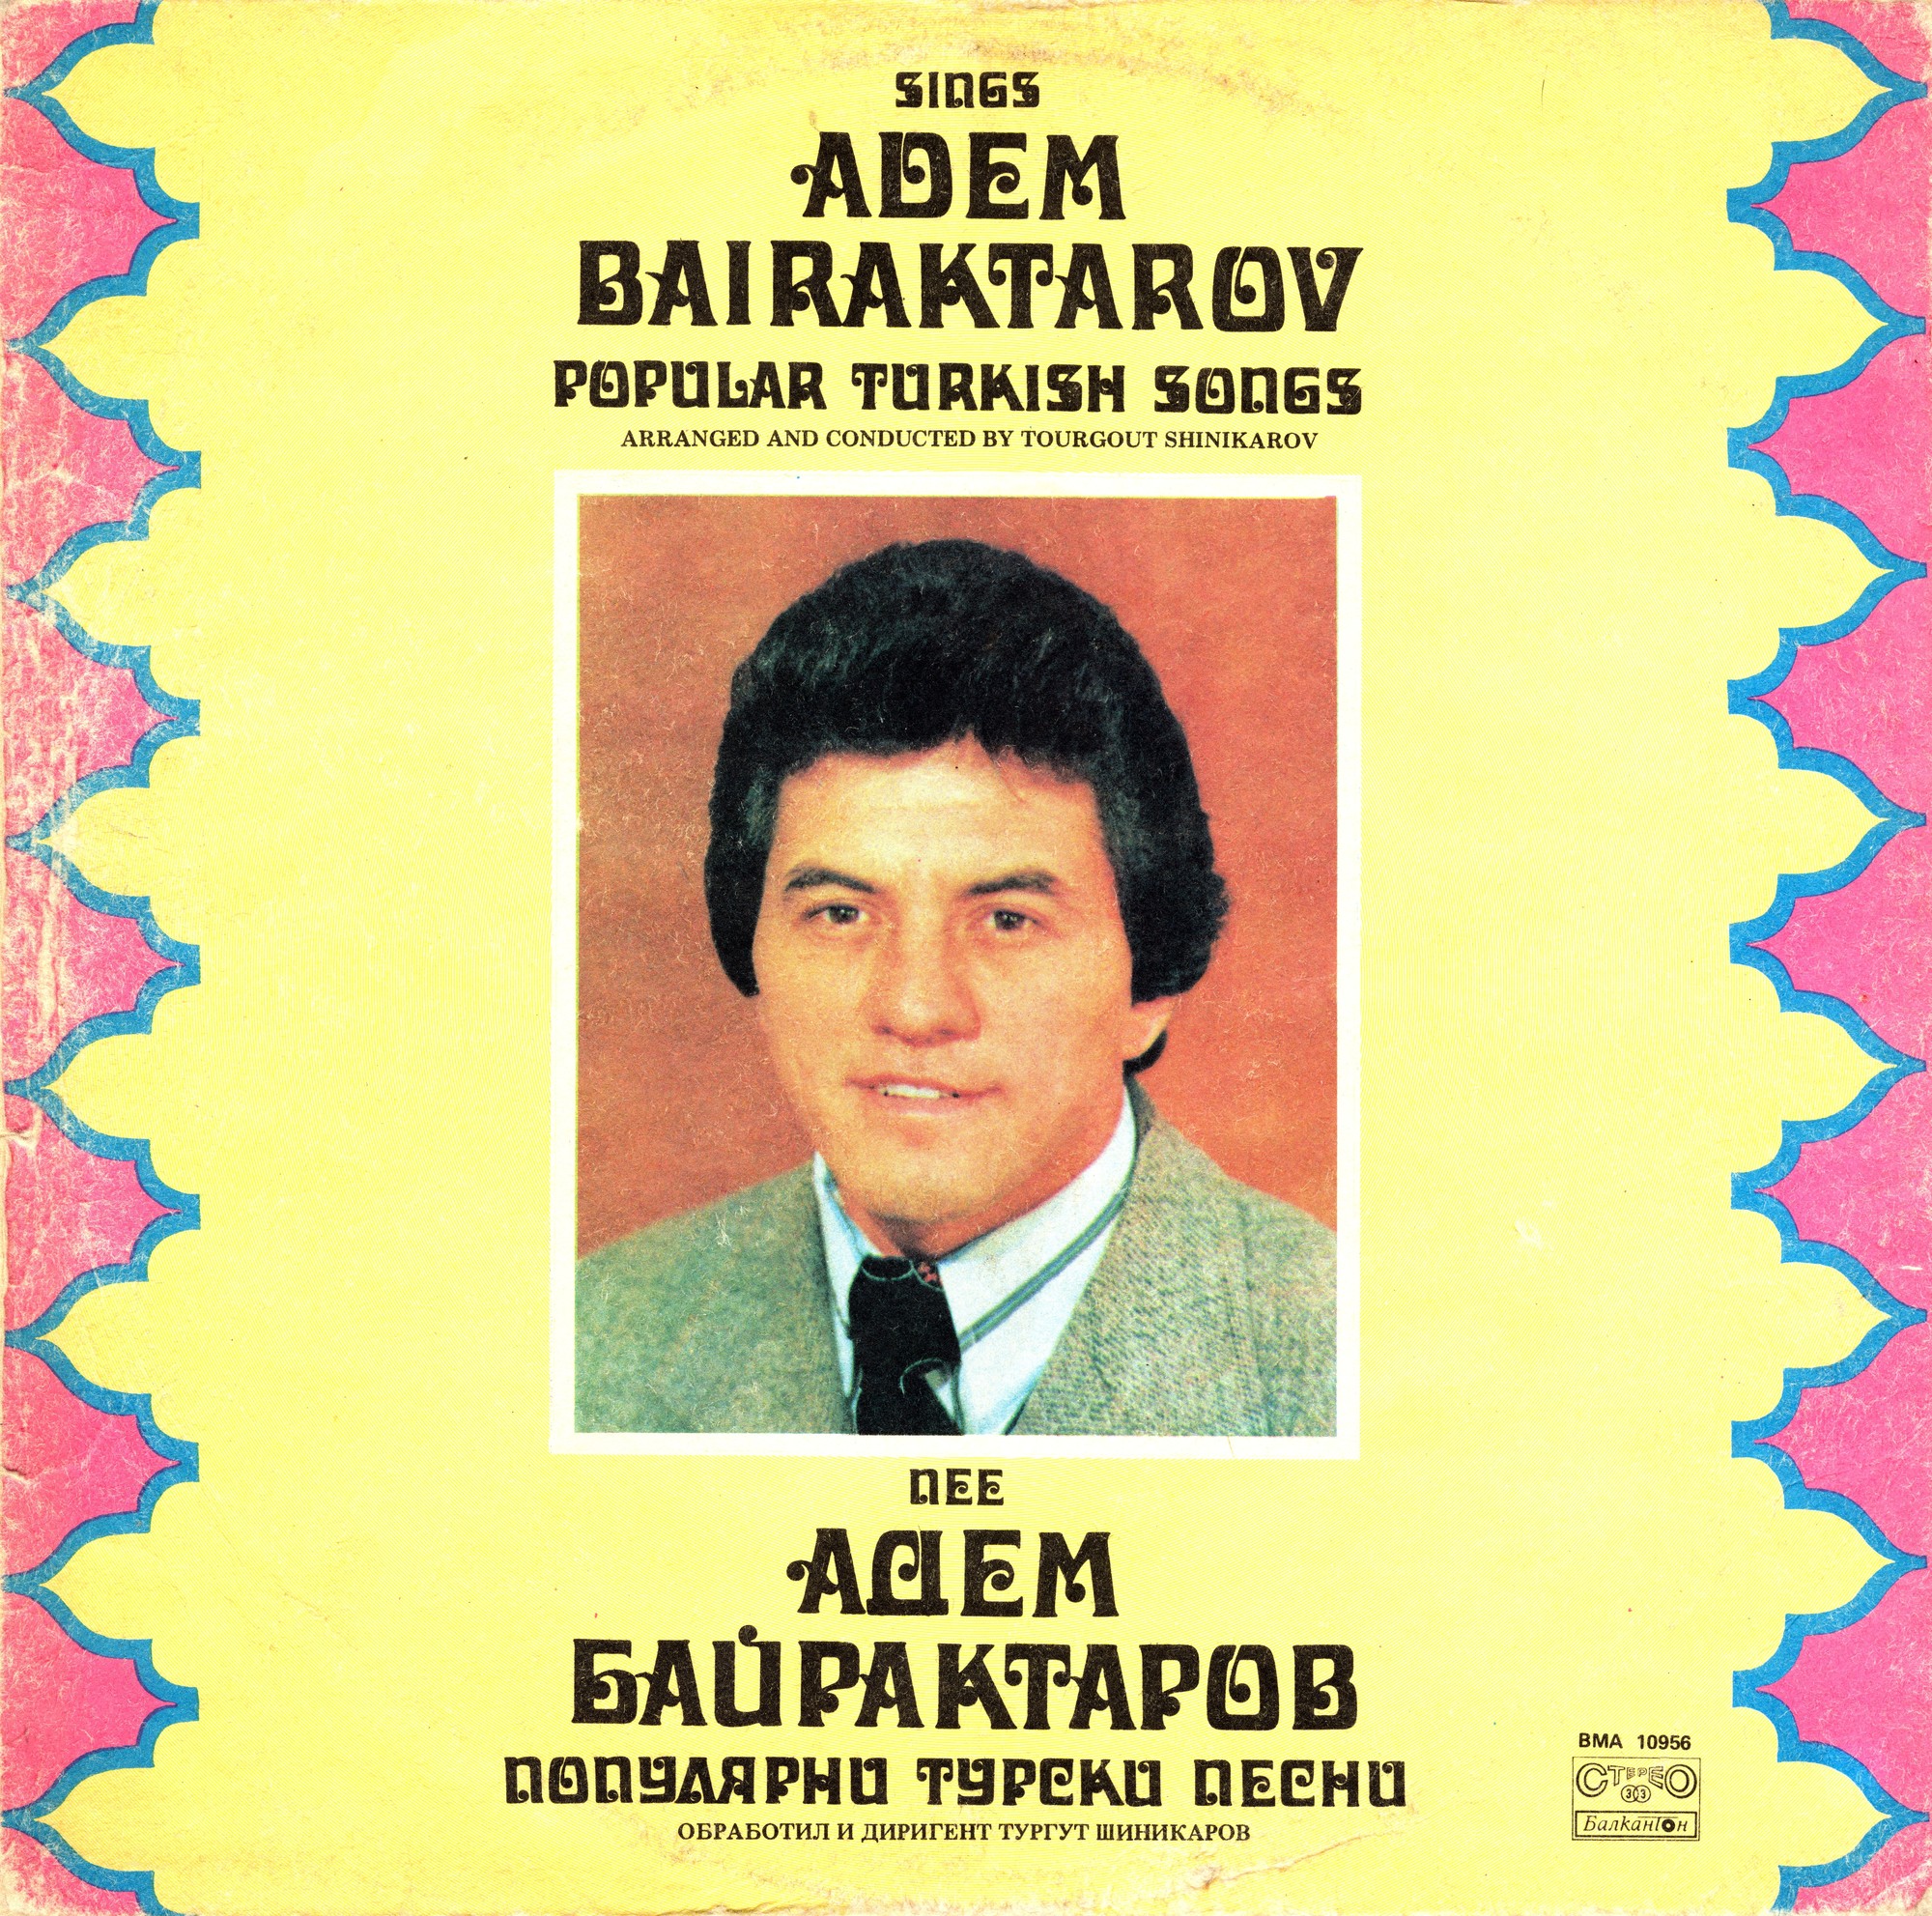 Адем Байрактаров. Популярни турски песни